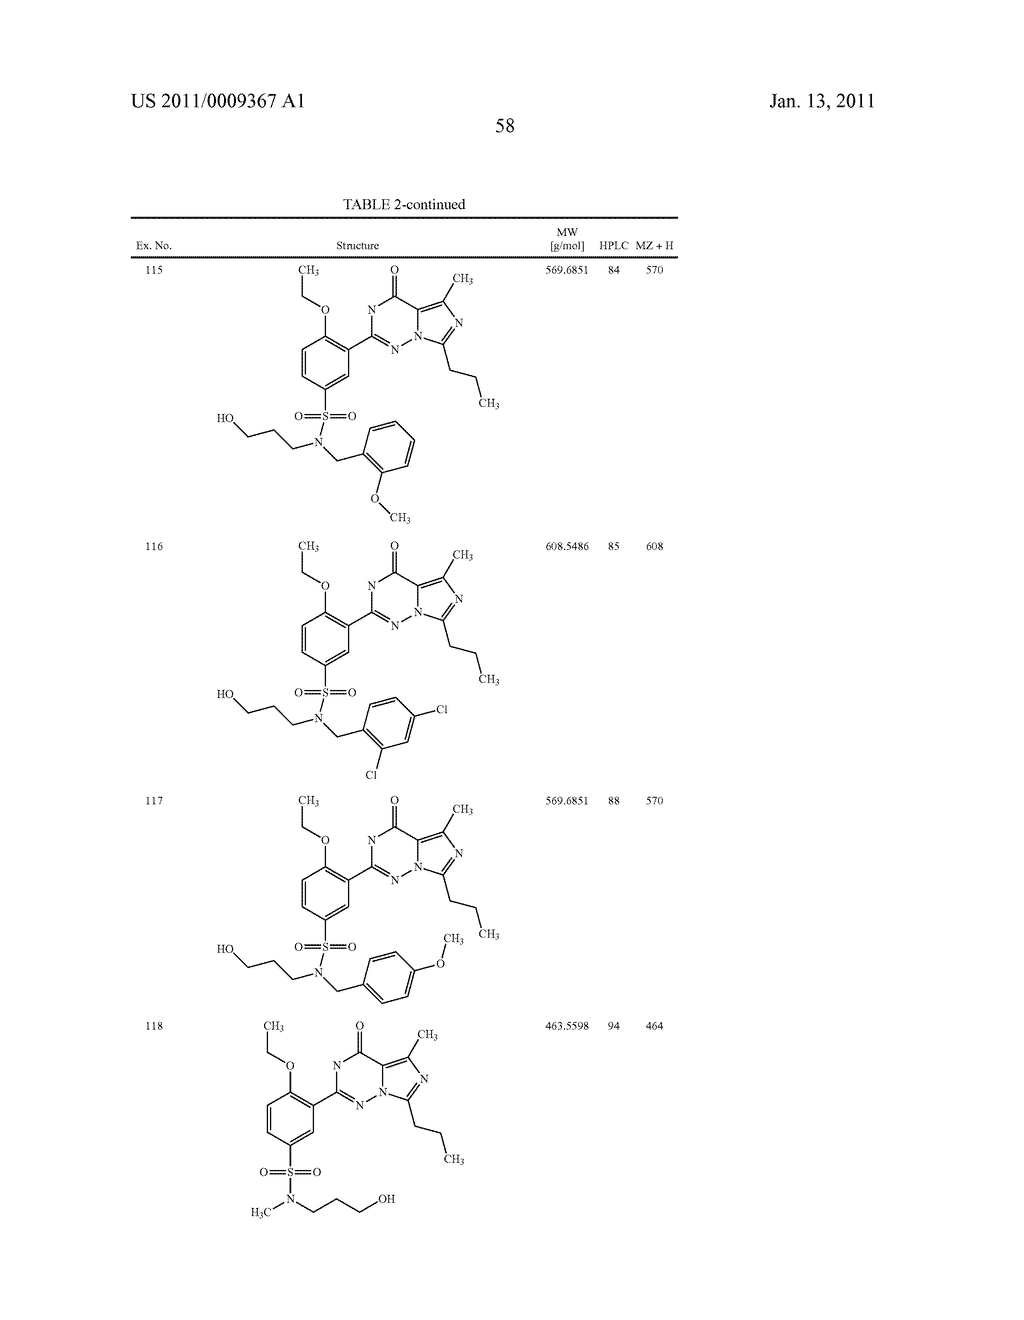 2-PHENYL SUBSTITUTED IMIDAZOTRIAZINONES AS PHOSPHODIESTERASE INHIBITORS - diagram, schematic, and image 59